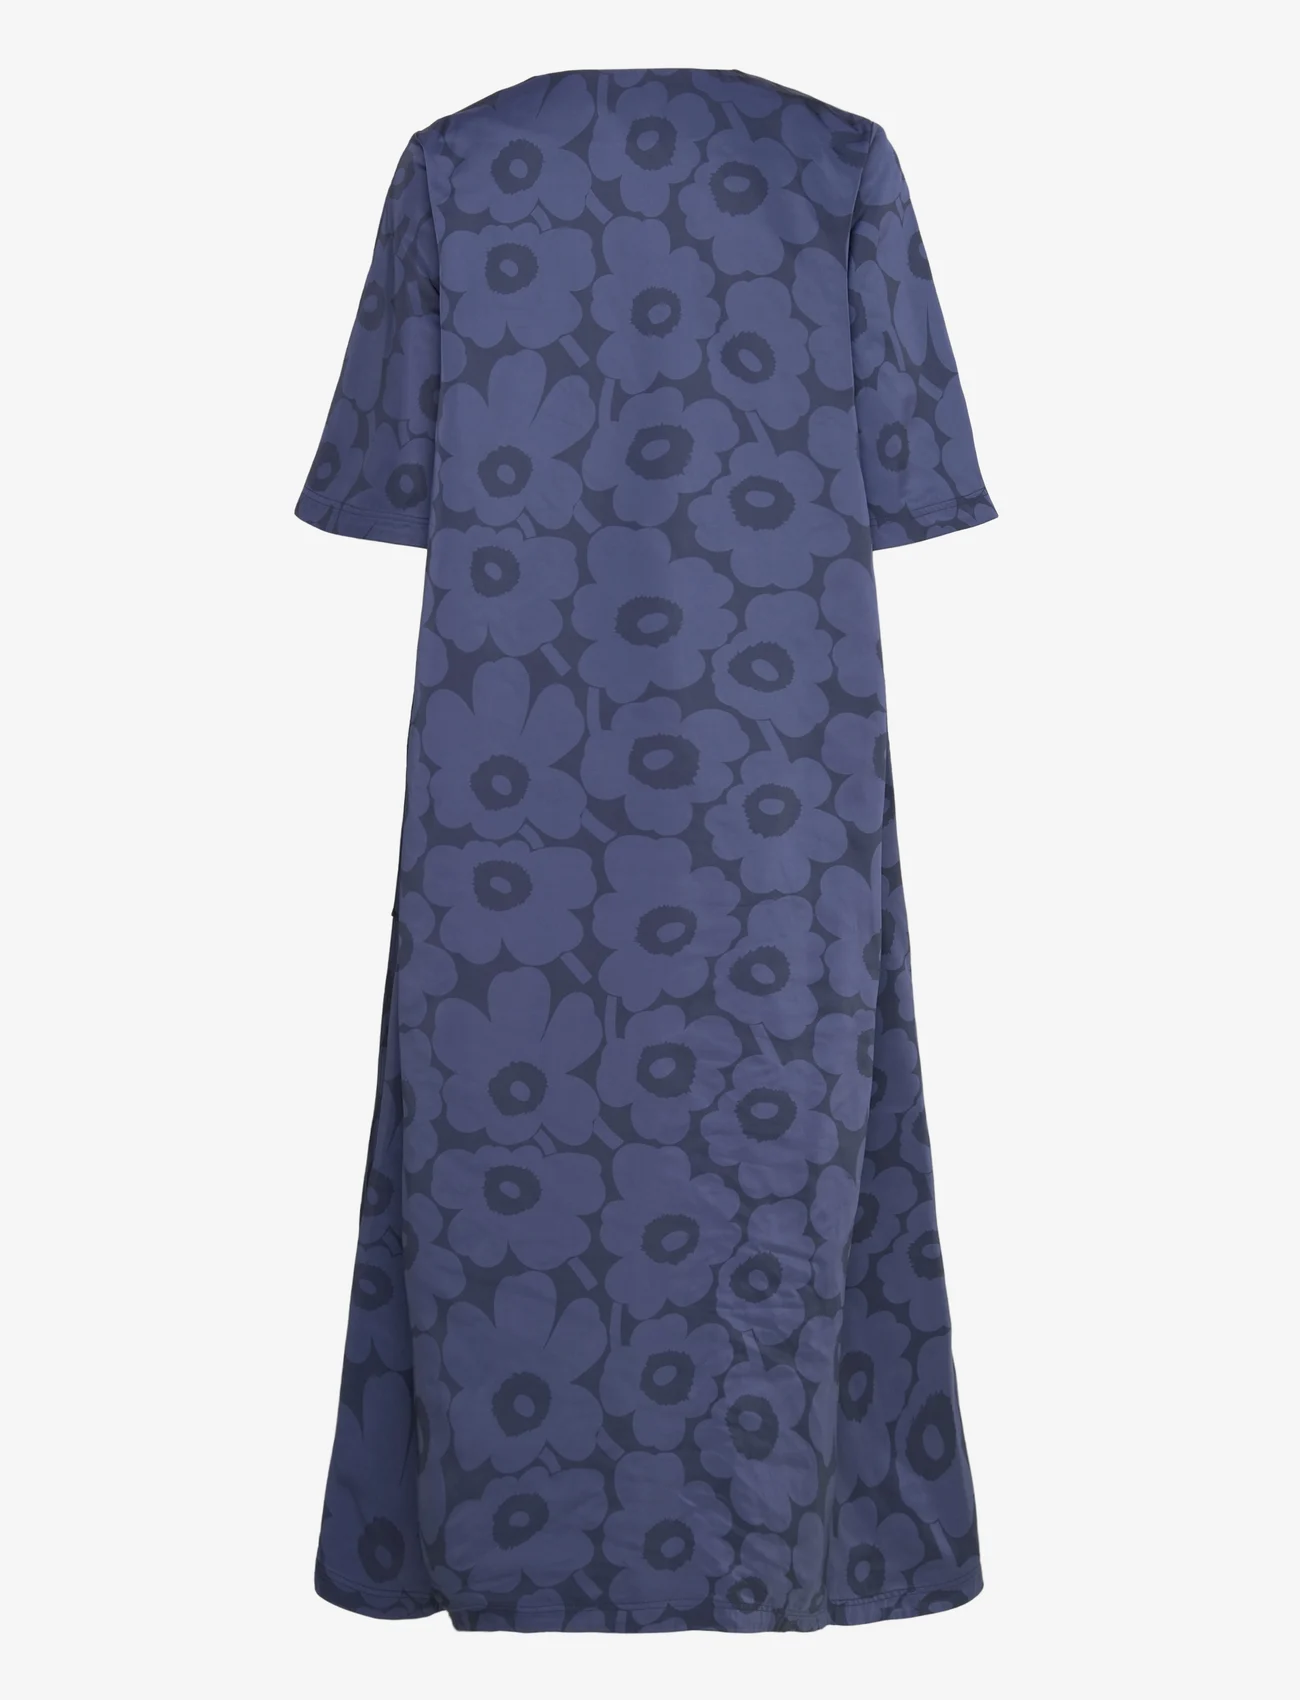 Marimekko - EDELLE MINI UNIKOT - maxi dresses - blue, dark blue - 1